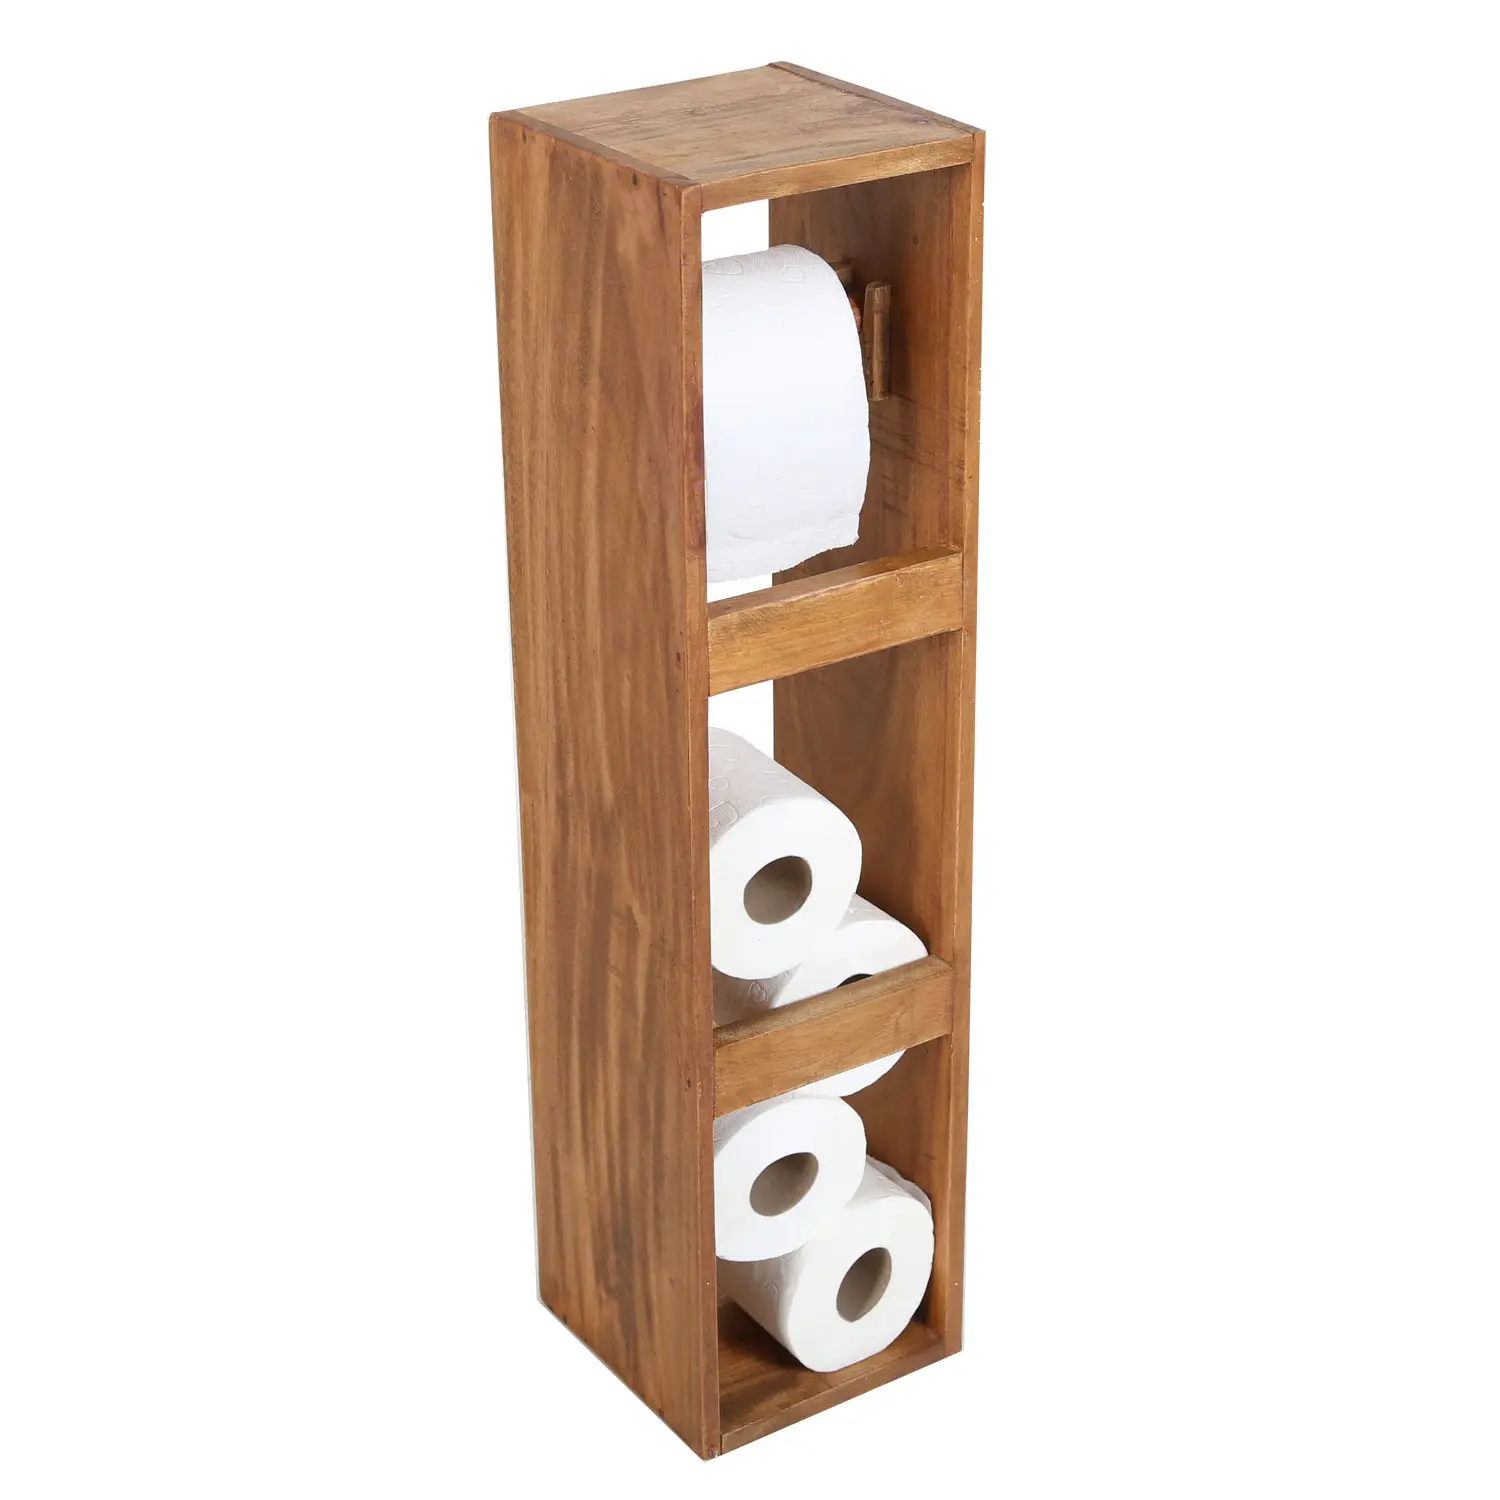 Elisa Holz Toilettenpapierhalter